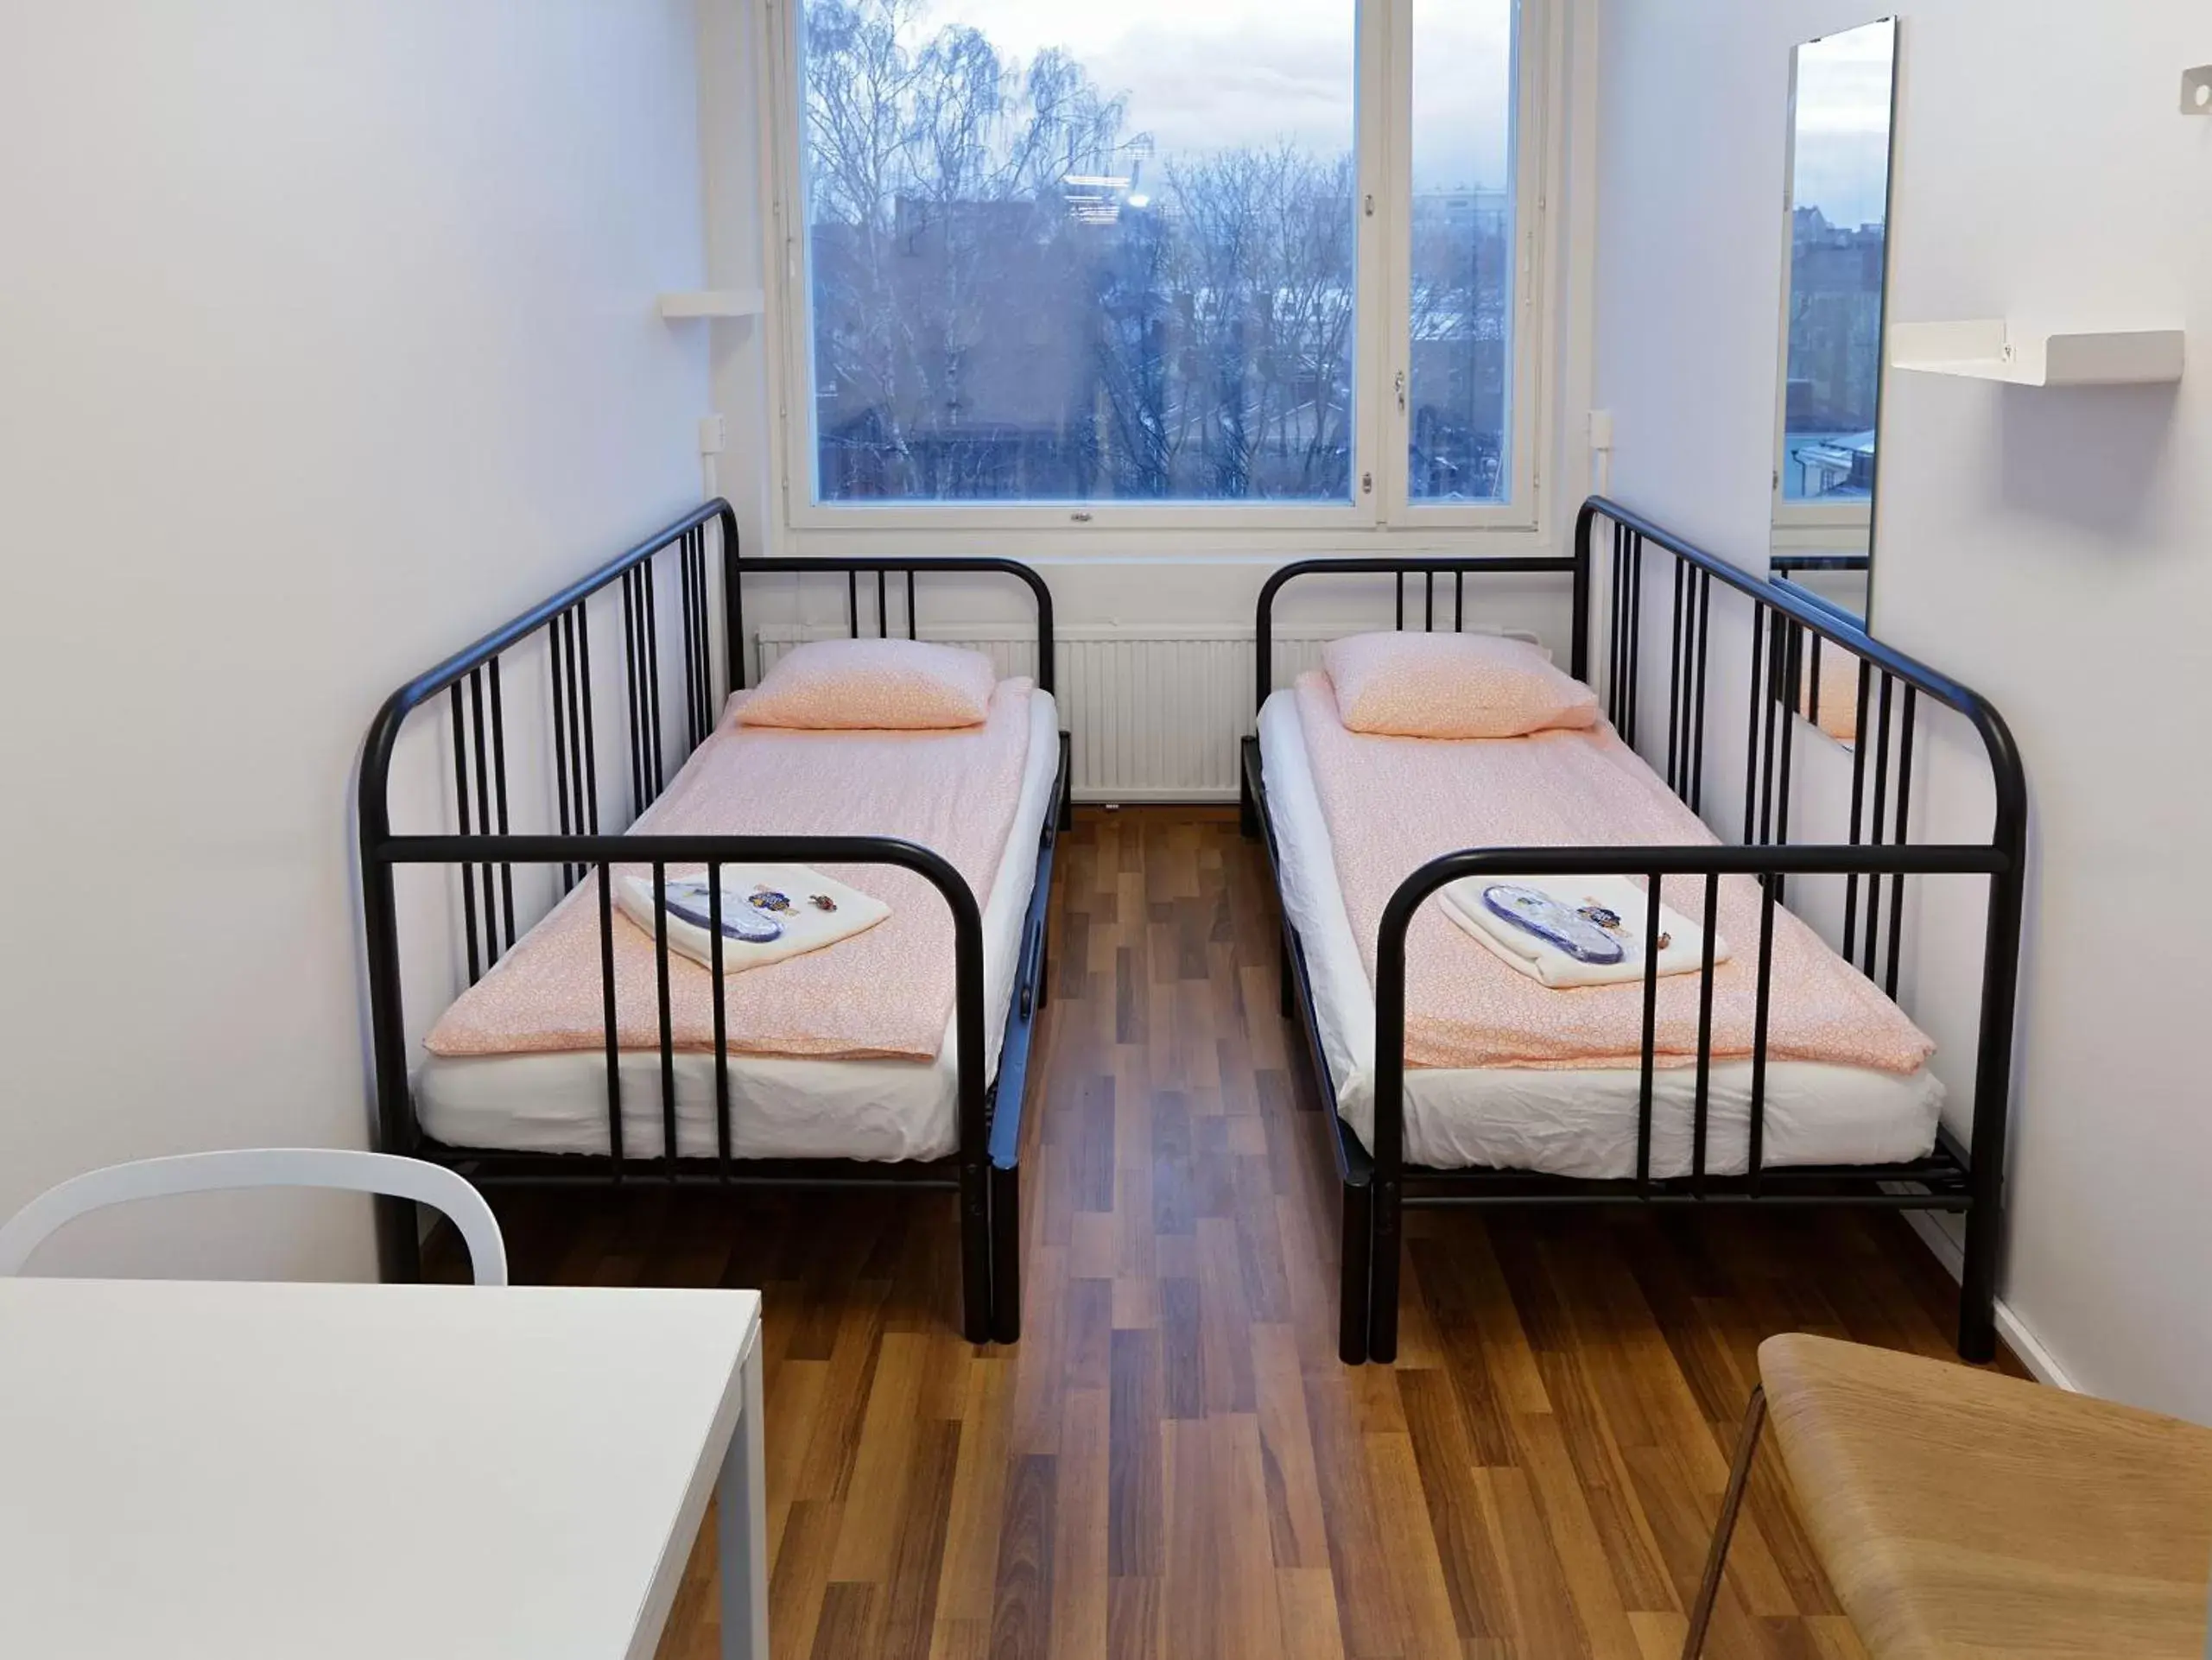 Twin Room with Shared Bathroom in CheapSleep Hostel Helsinki